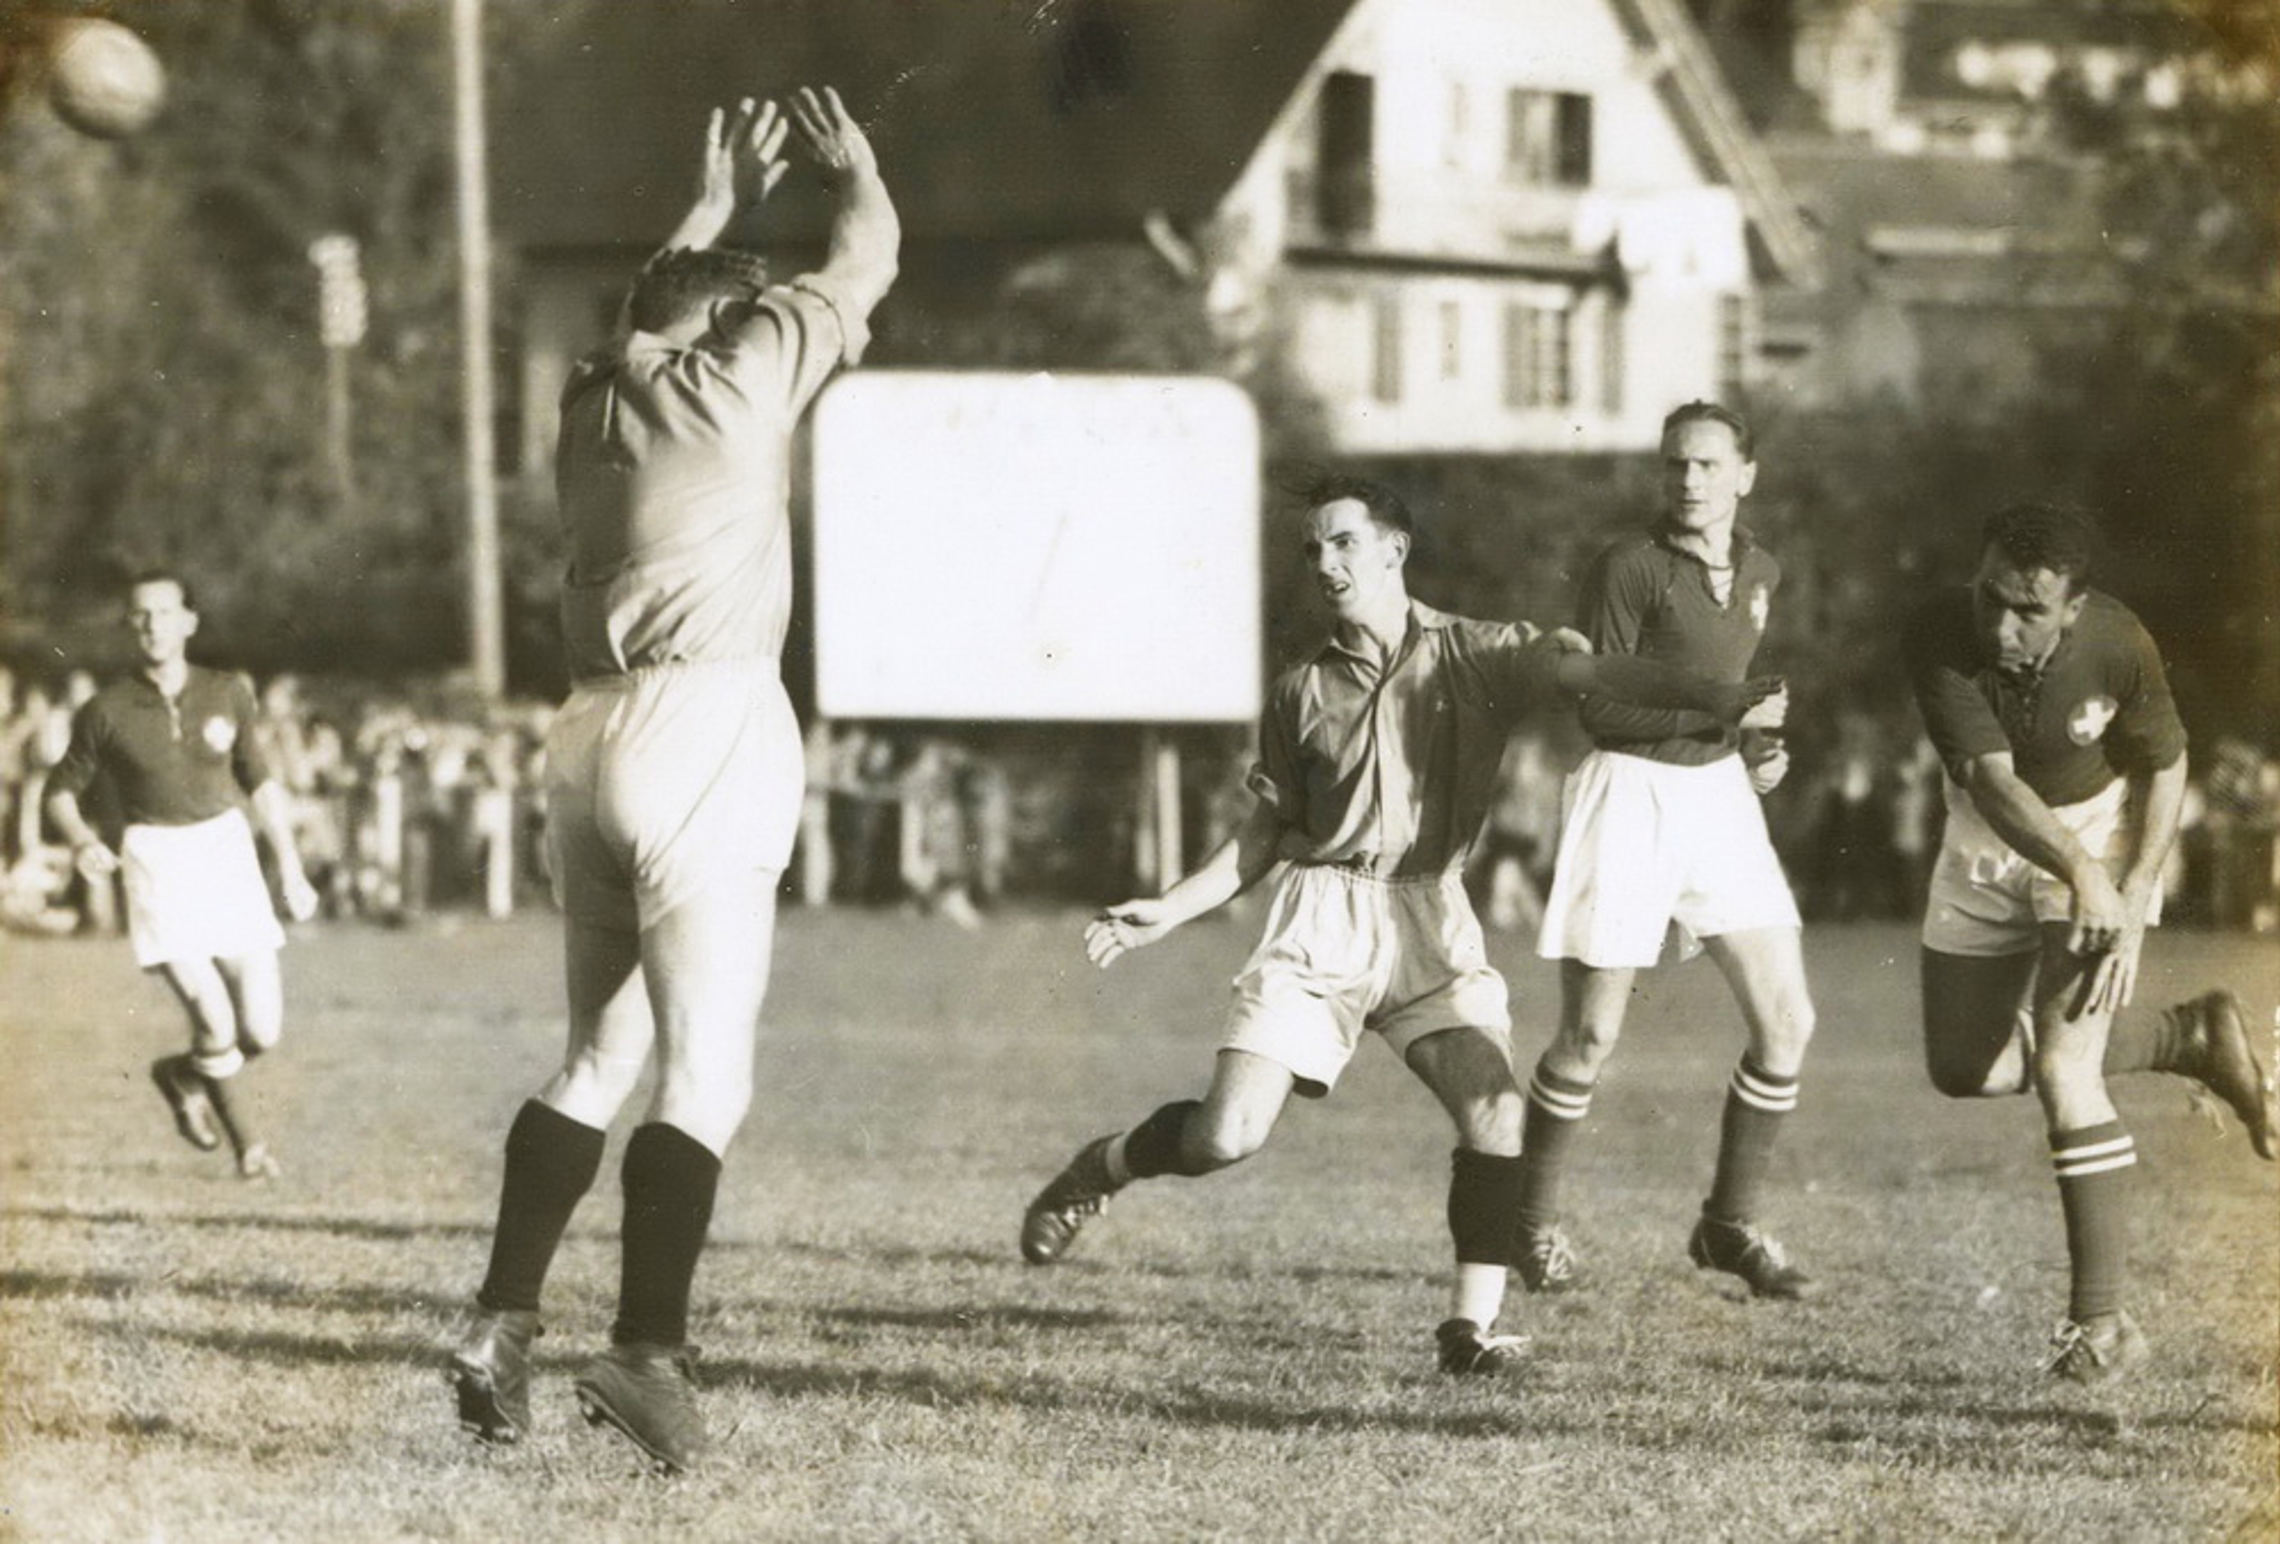 23.10.1949 Schweiz - Frankreich 15:8 (7:5), Thun Sportplatz Grabengut, 4000 Zuschauer, Schiedsrichter Stumvoll (AUT, Linz)